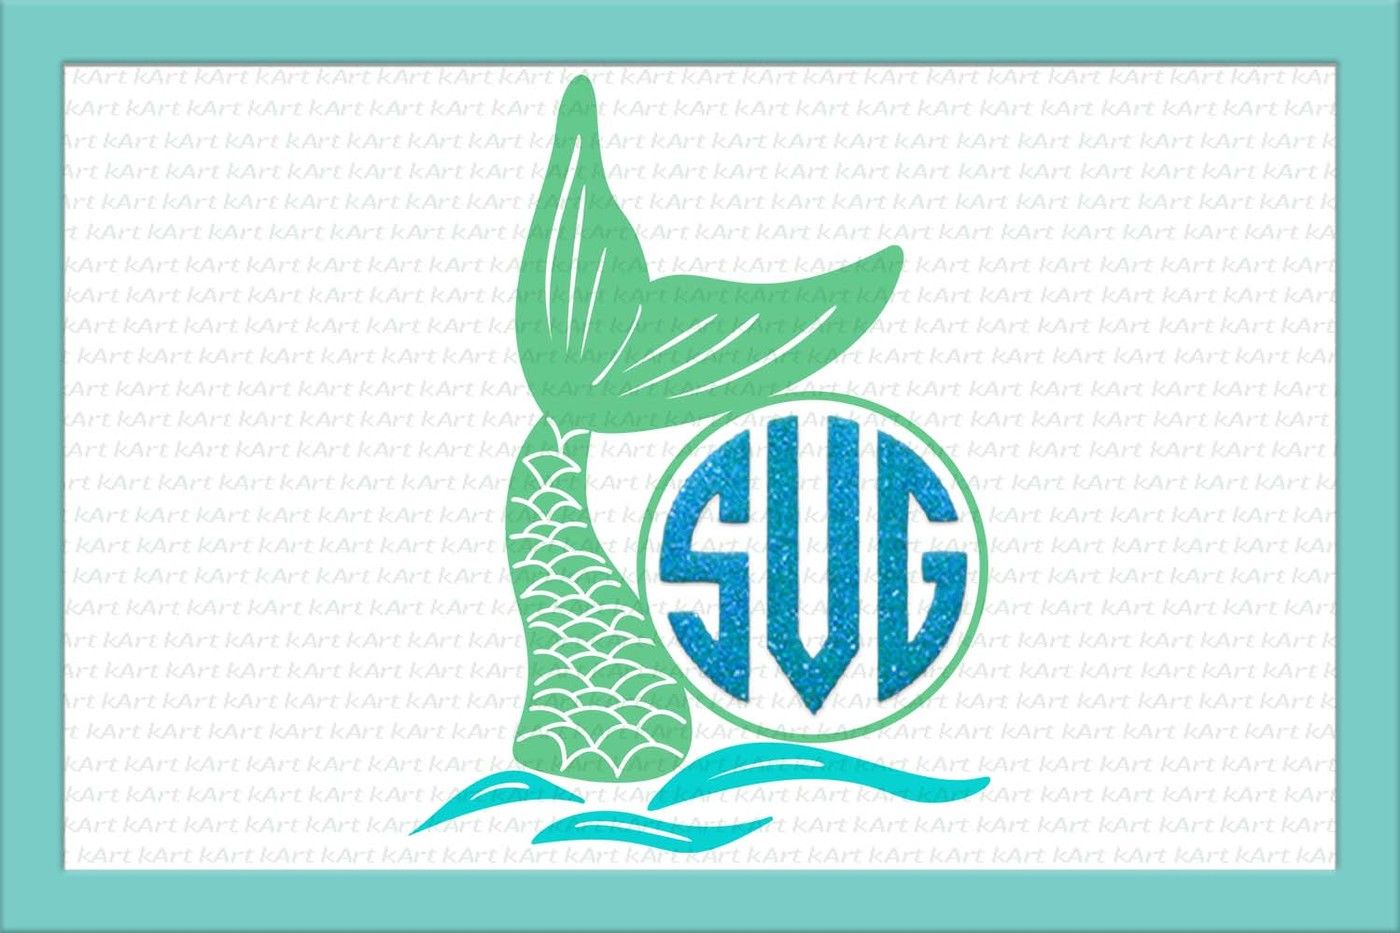 Free Free 190 Unicorn Mermaid Princess Svg SVG PNG EPS DXF File